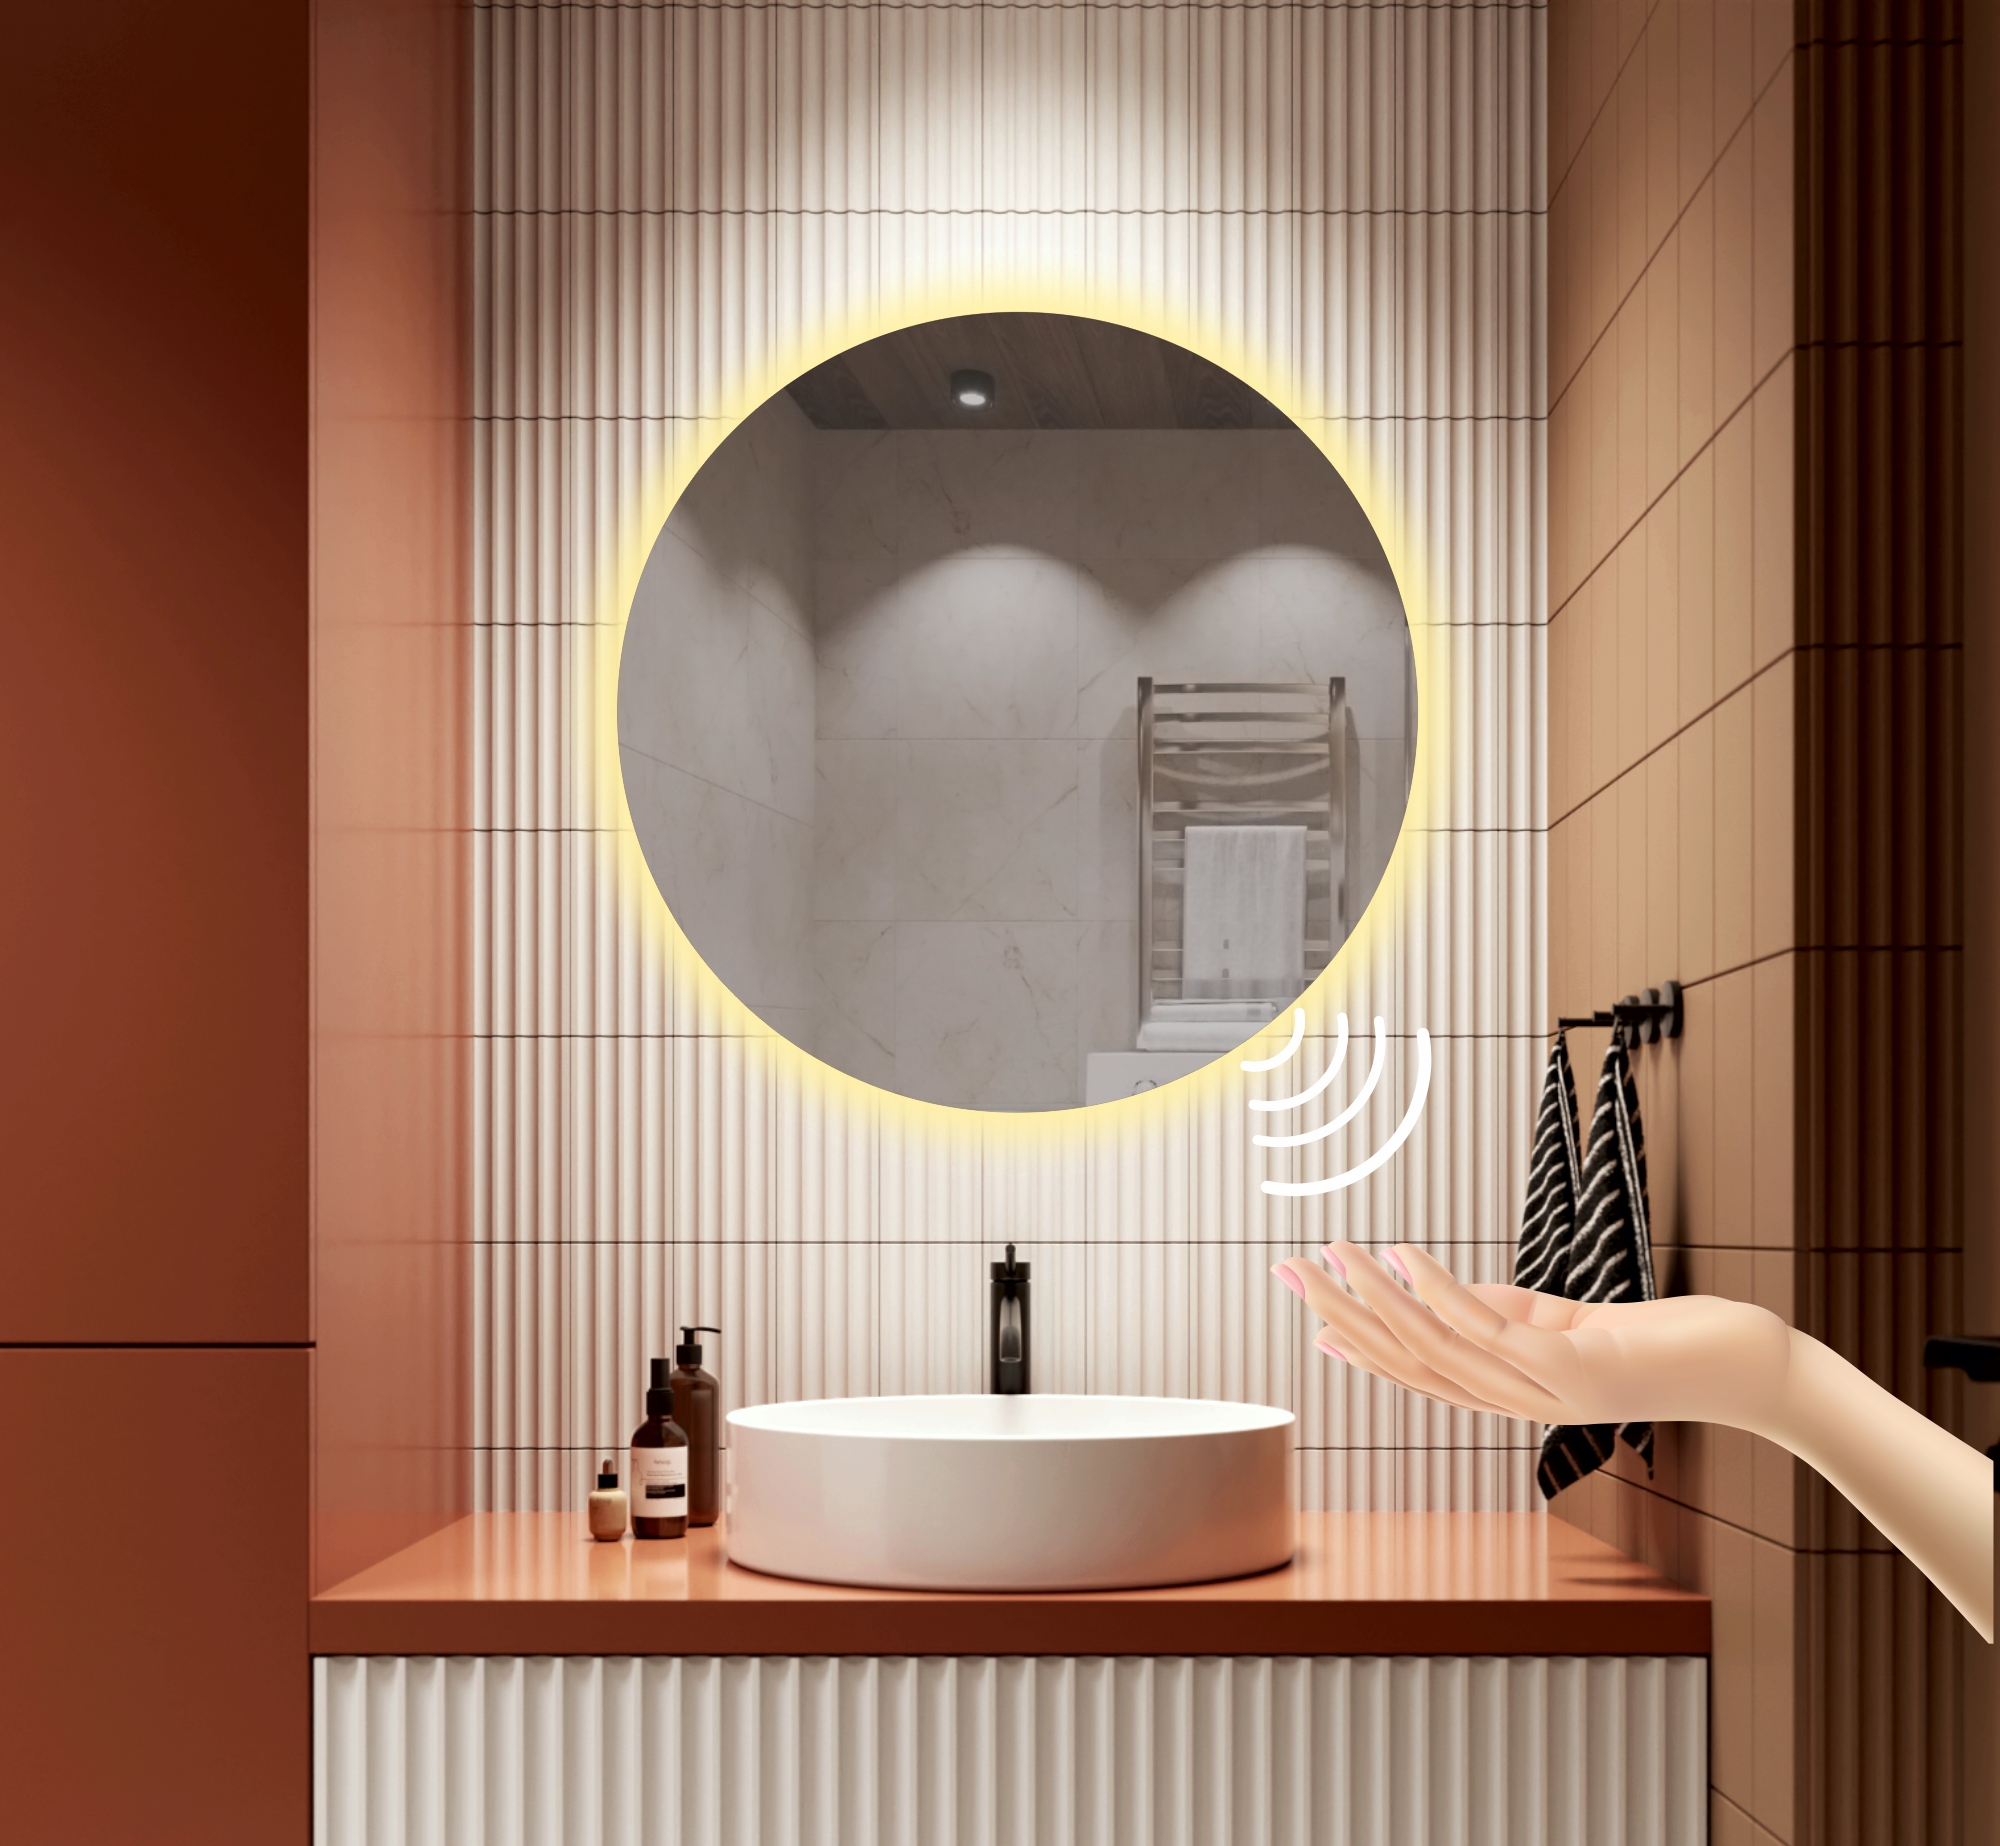 Зеркало для ванной Alfa Mirrors с теплой подсветкой 3200К круглое 60см, арт. Na-6Vzt